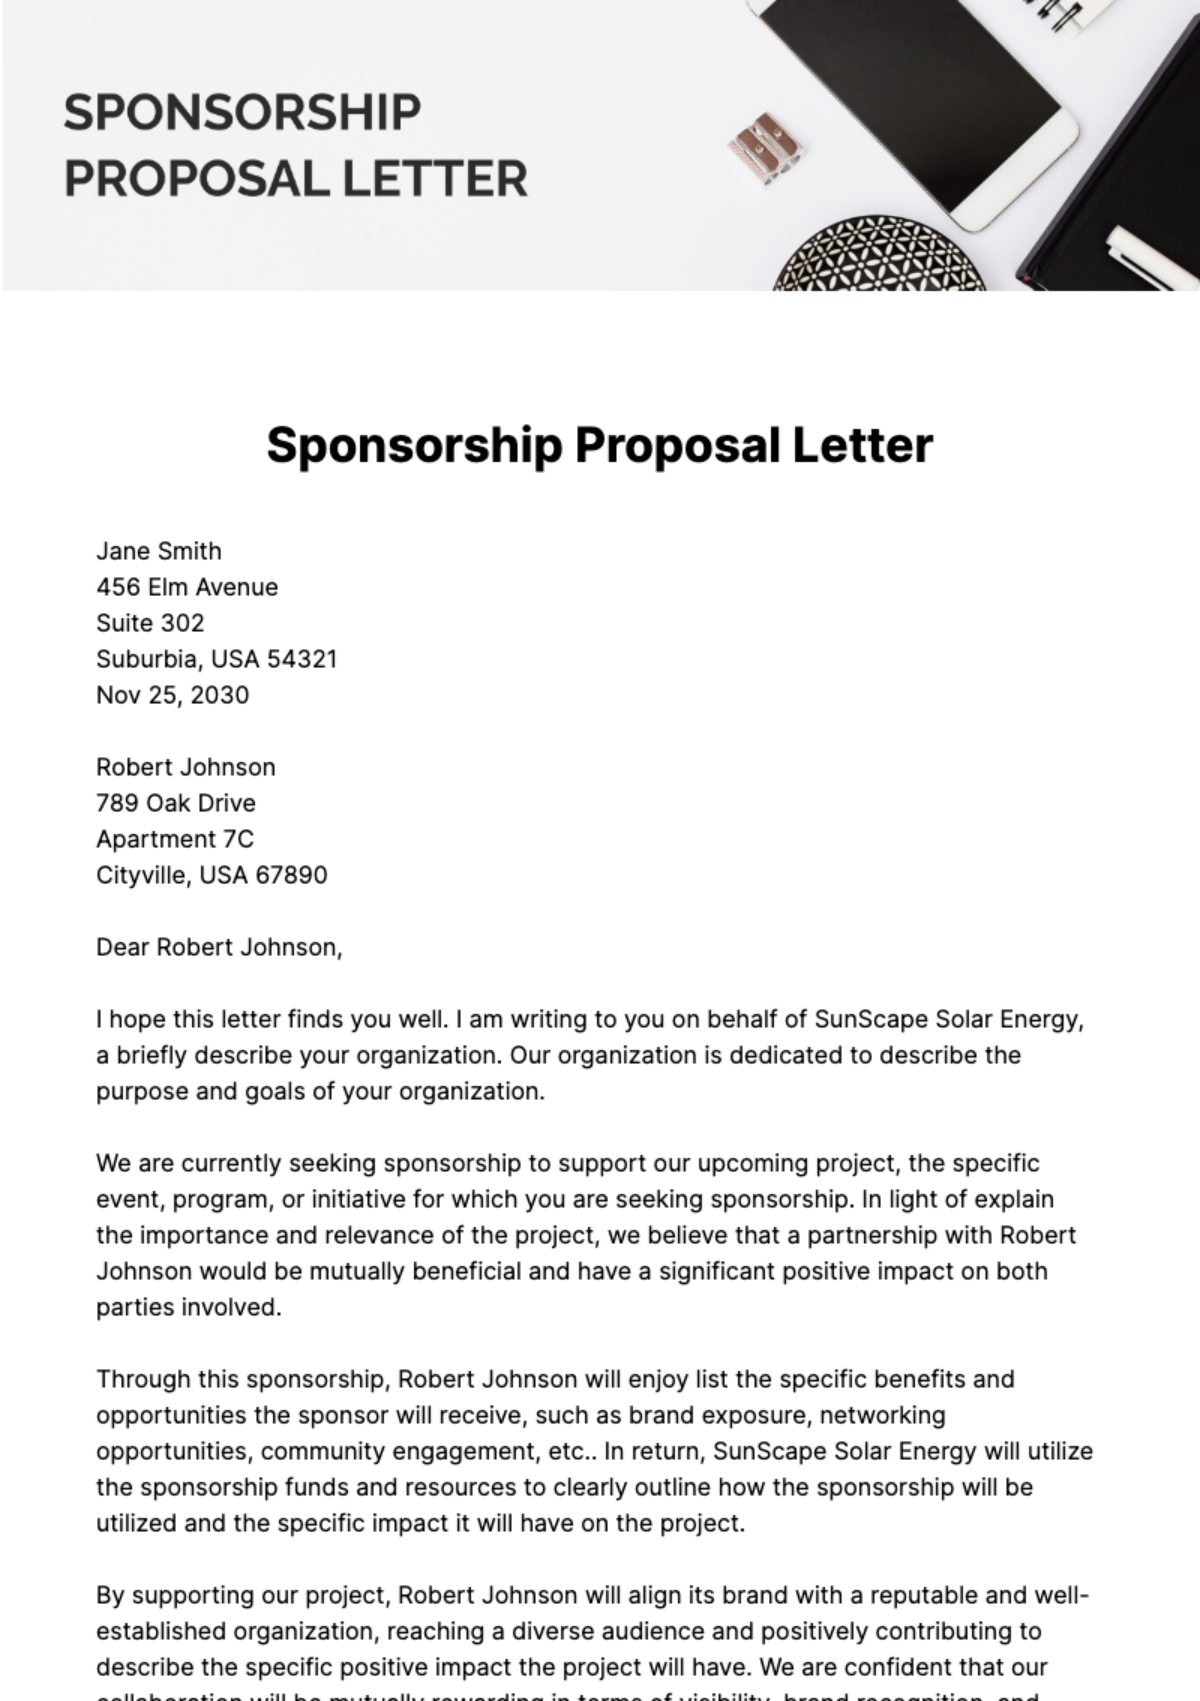 Free Sponsorship Proposal Letter Template